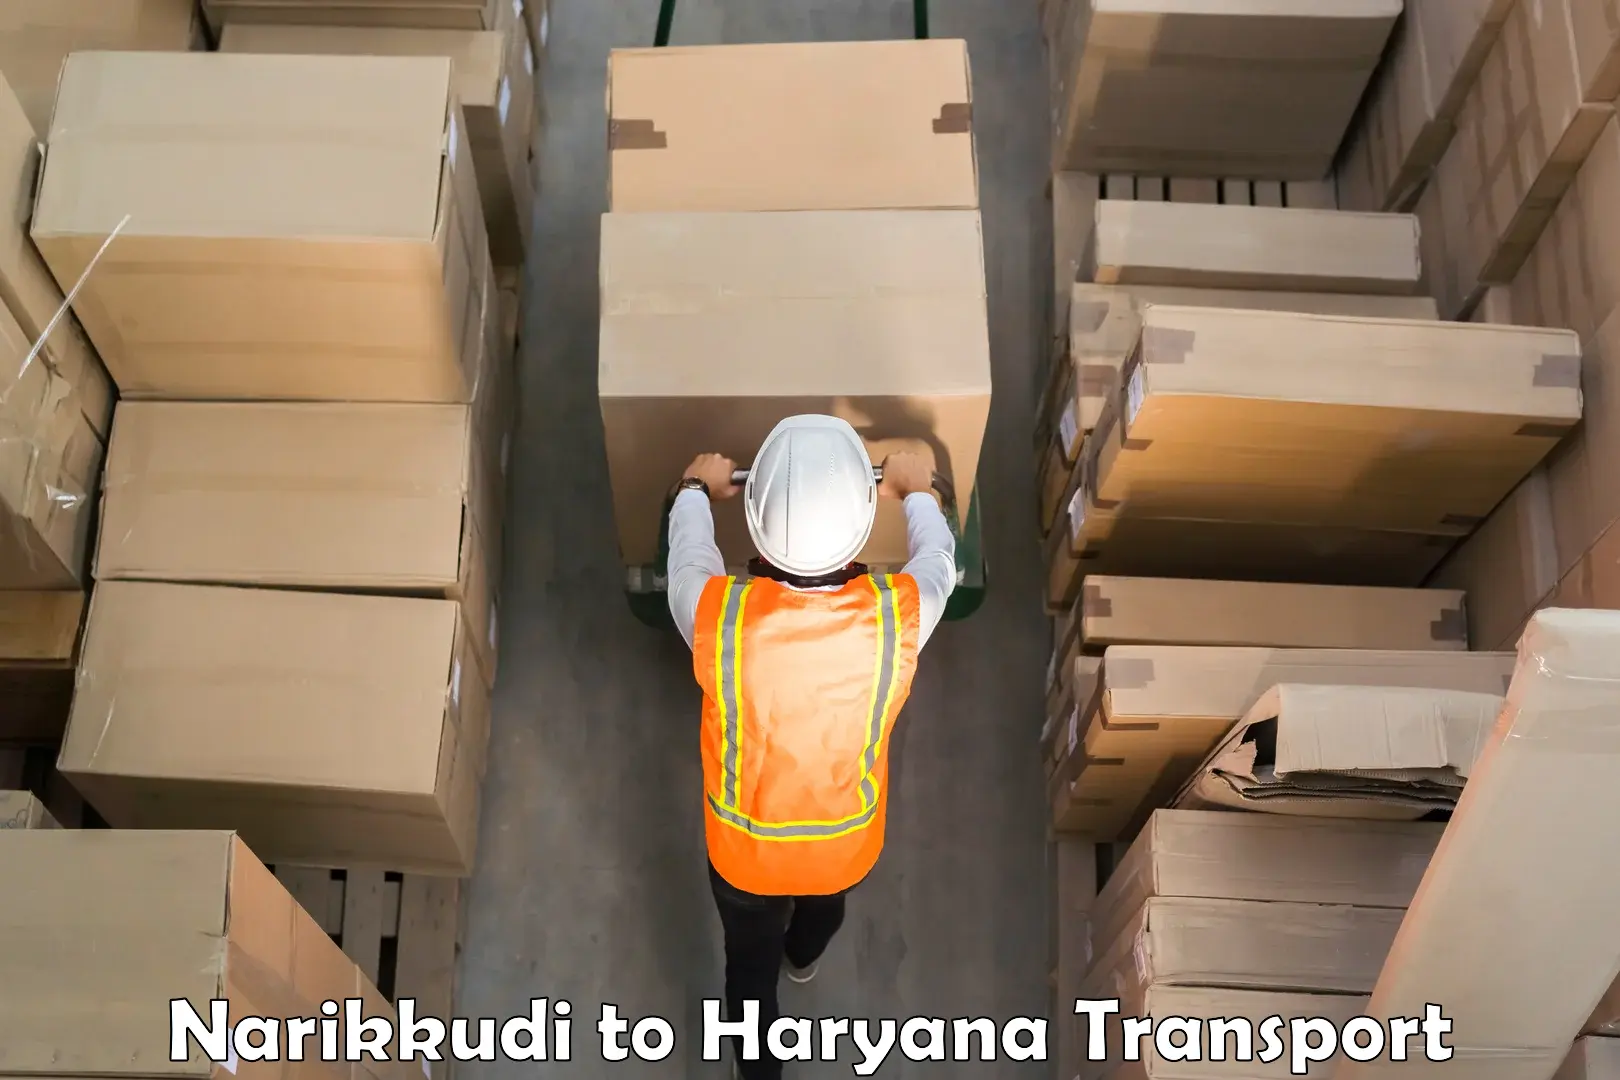 Truck transport companies in India in Narikkudi to Gurgaon